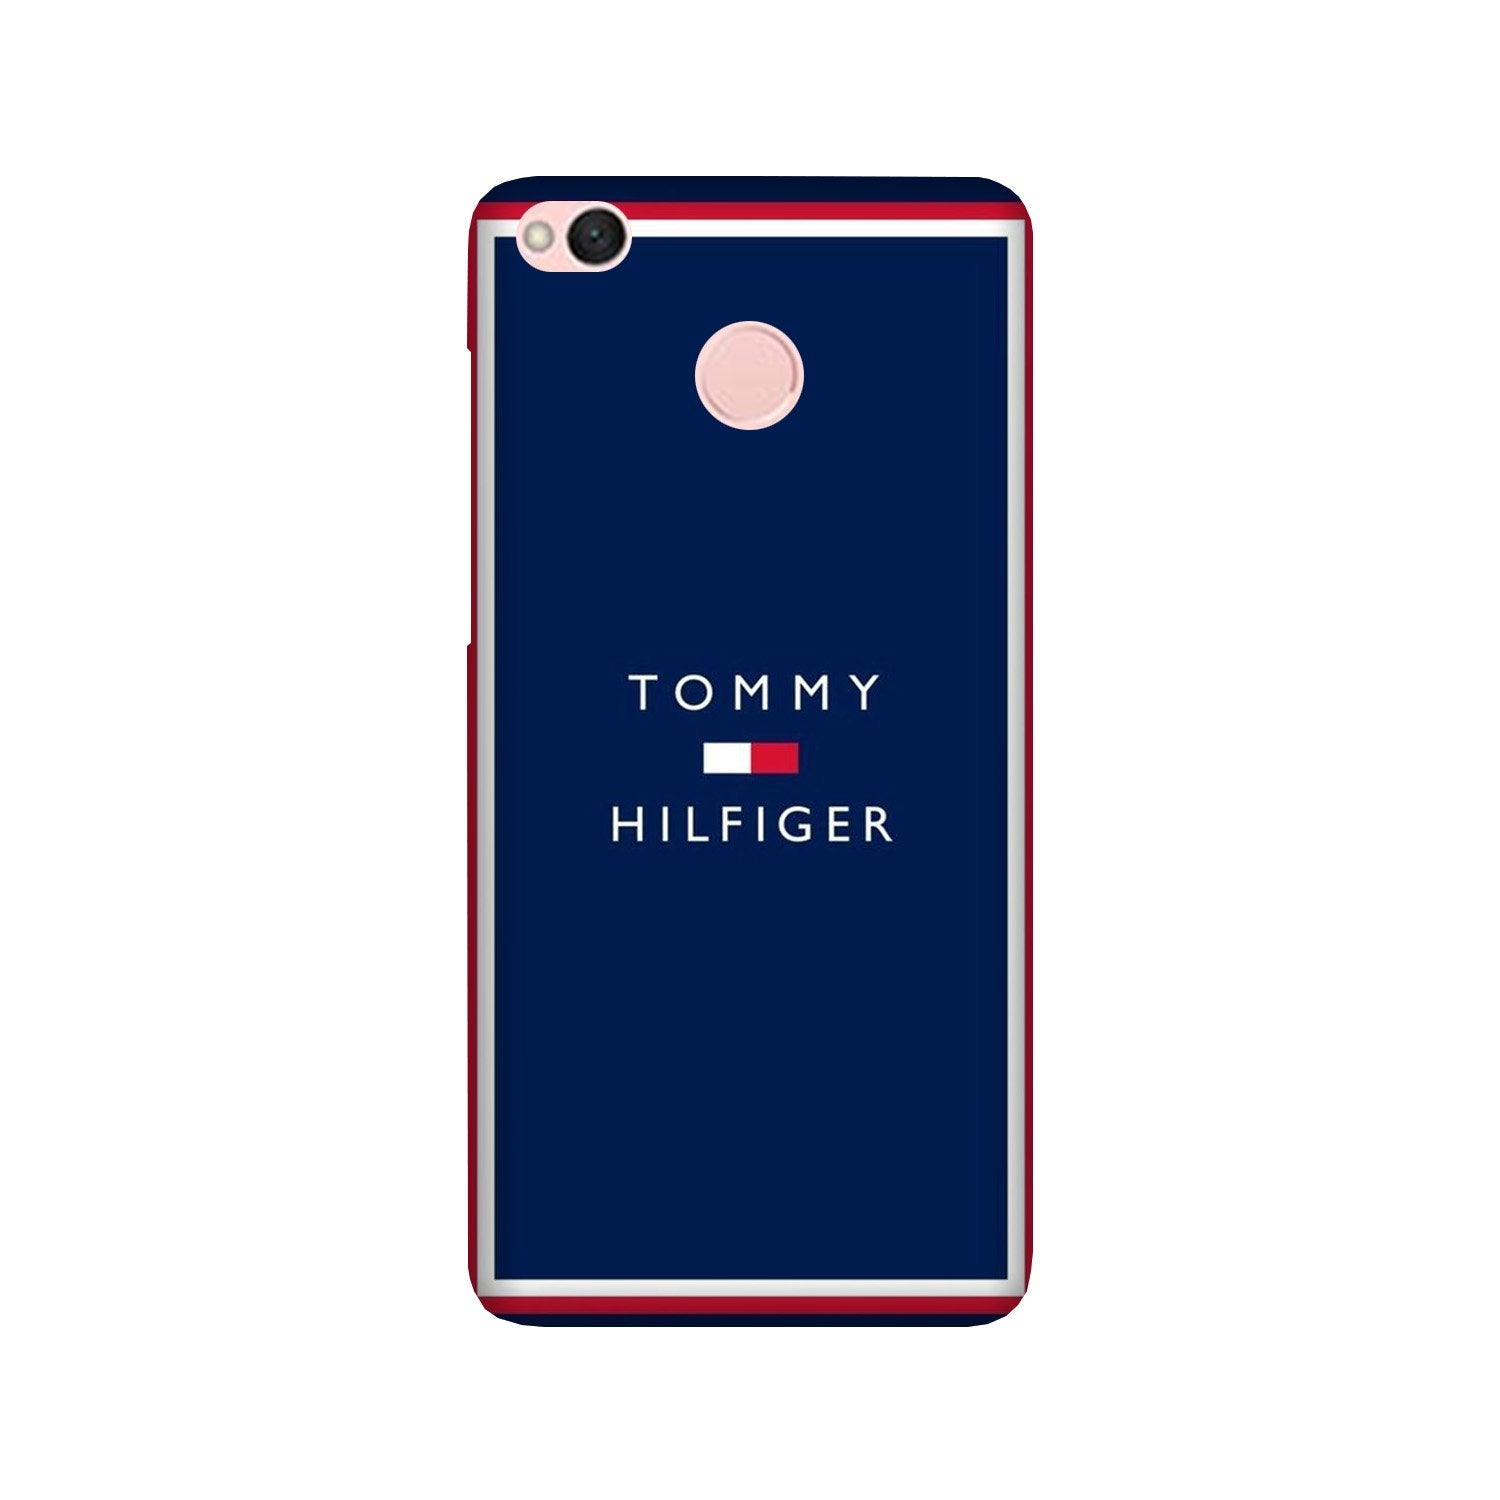 Tommy Hilfiger Case for Redmi 4 (Design No. 275)